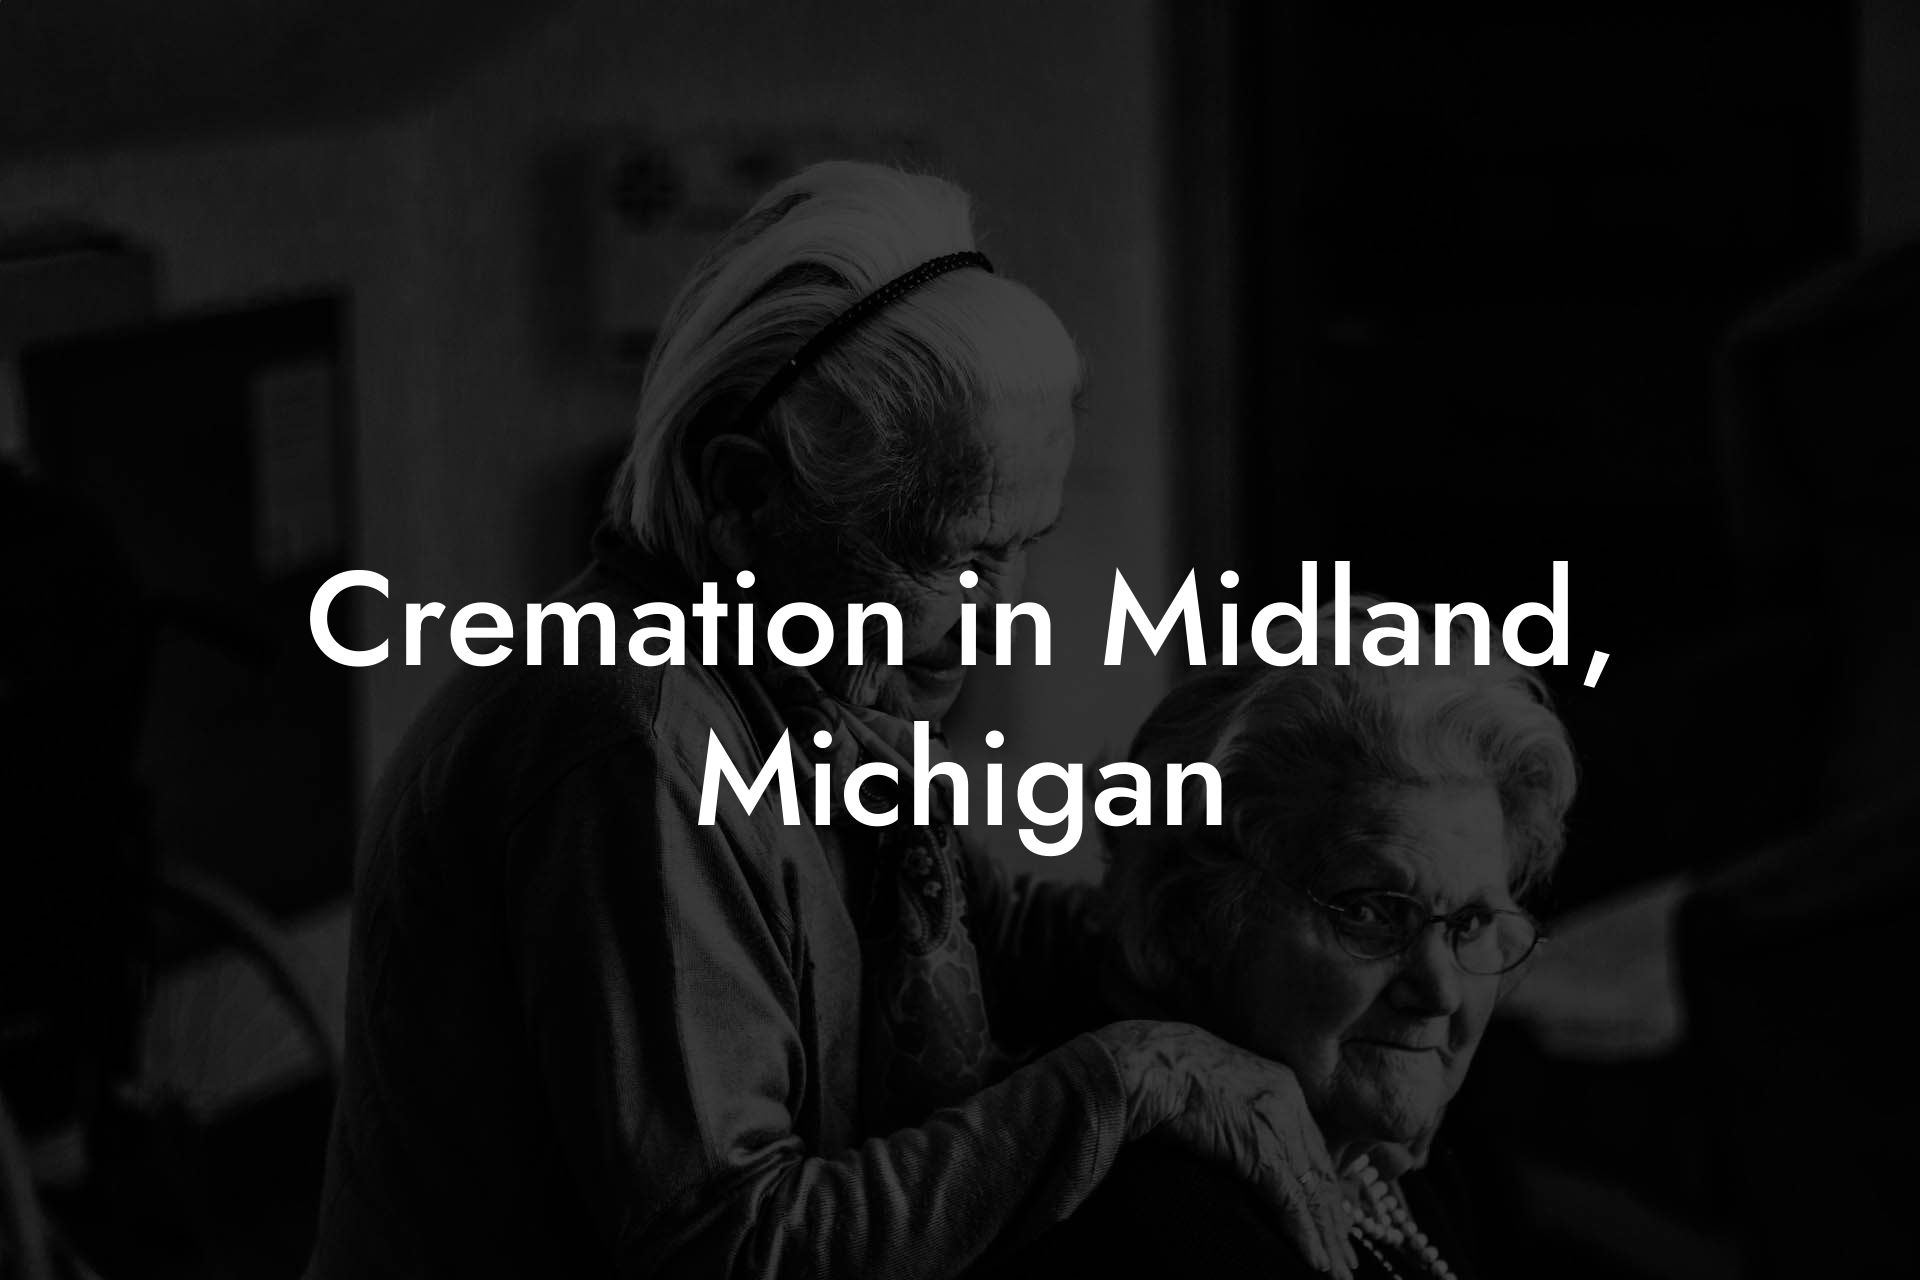 Cremation in Midland, Michigan